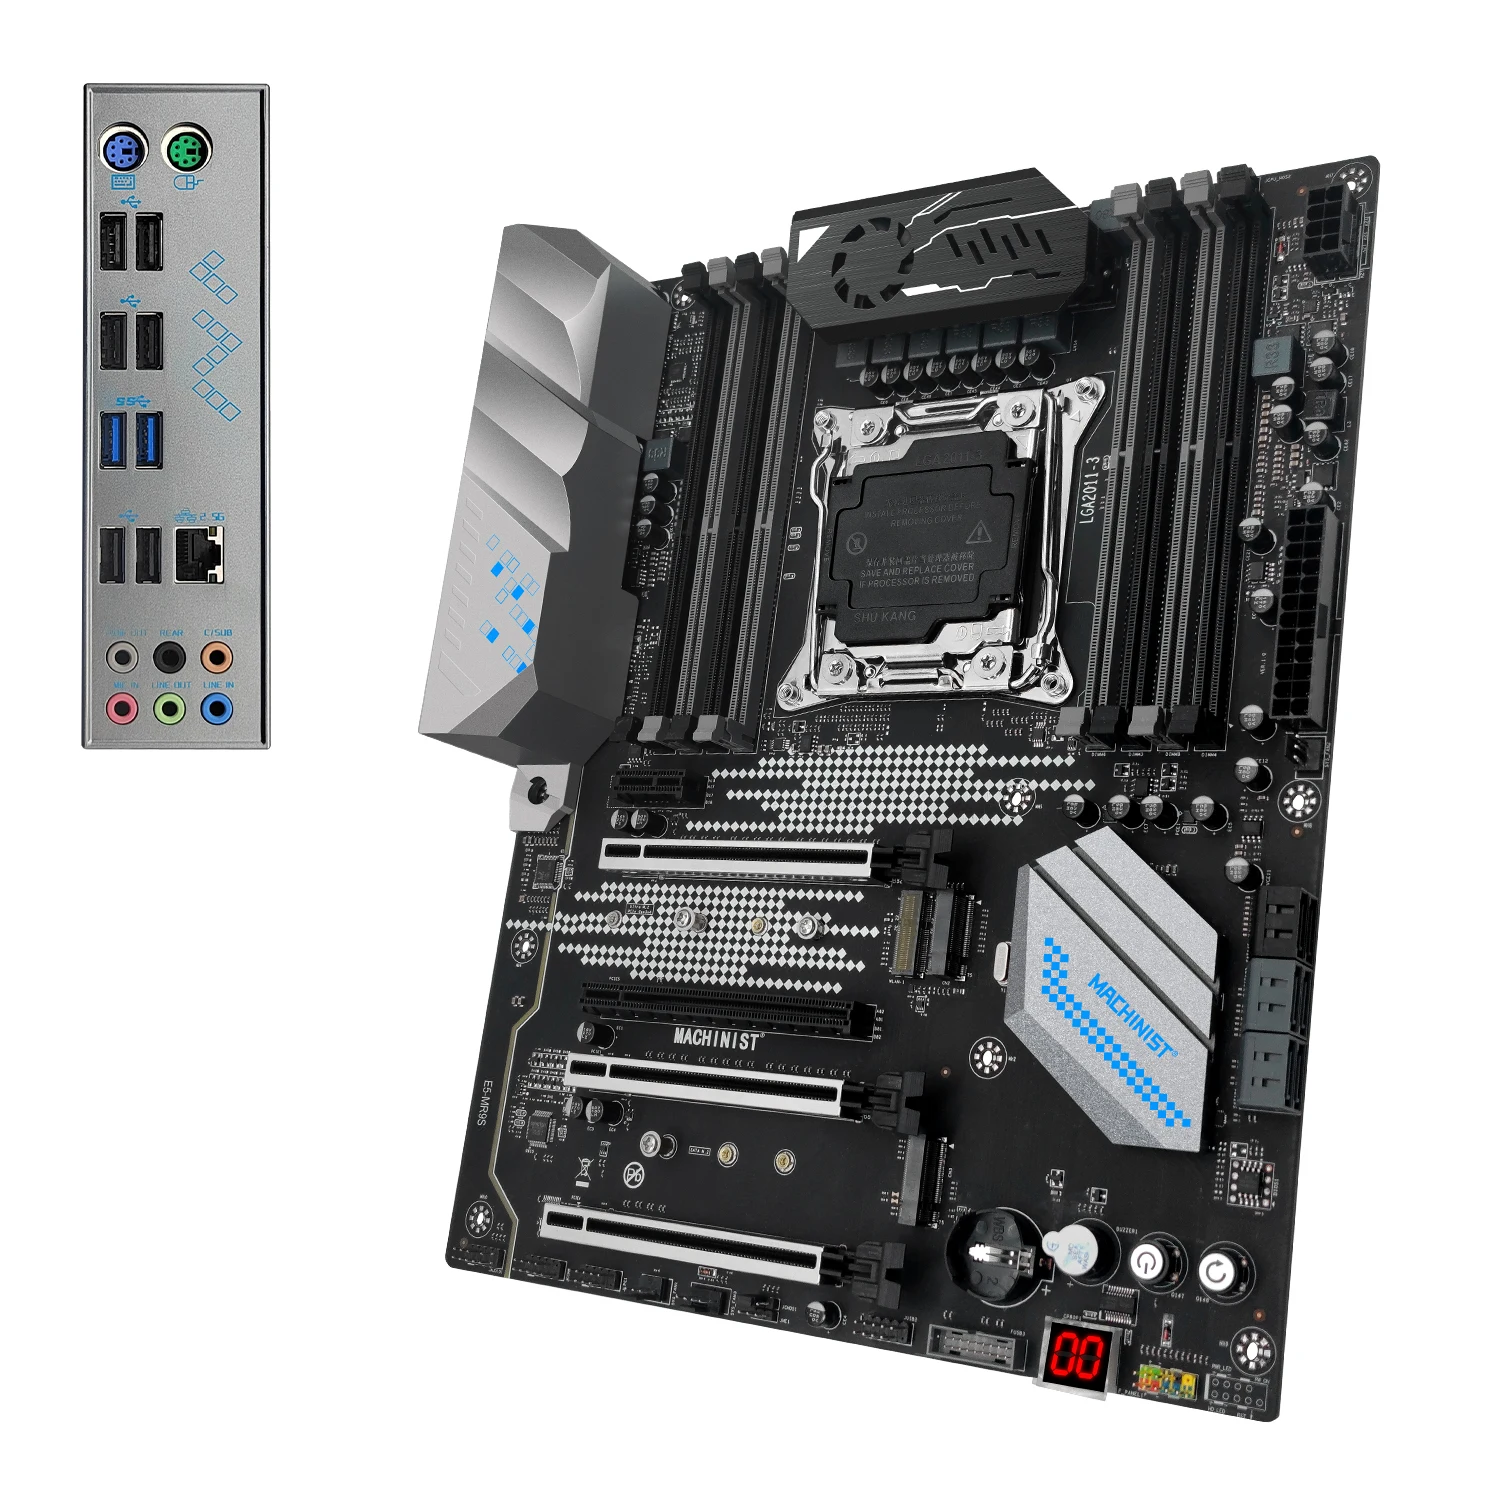 Machinist X99 MR9S motherboard LGA 2011-3 Support Xeon E5 V3/V4 series processor NVME M.2 M.2 USB 3.0 four channel 8 memory slot